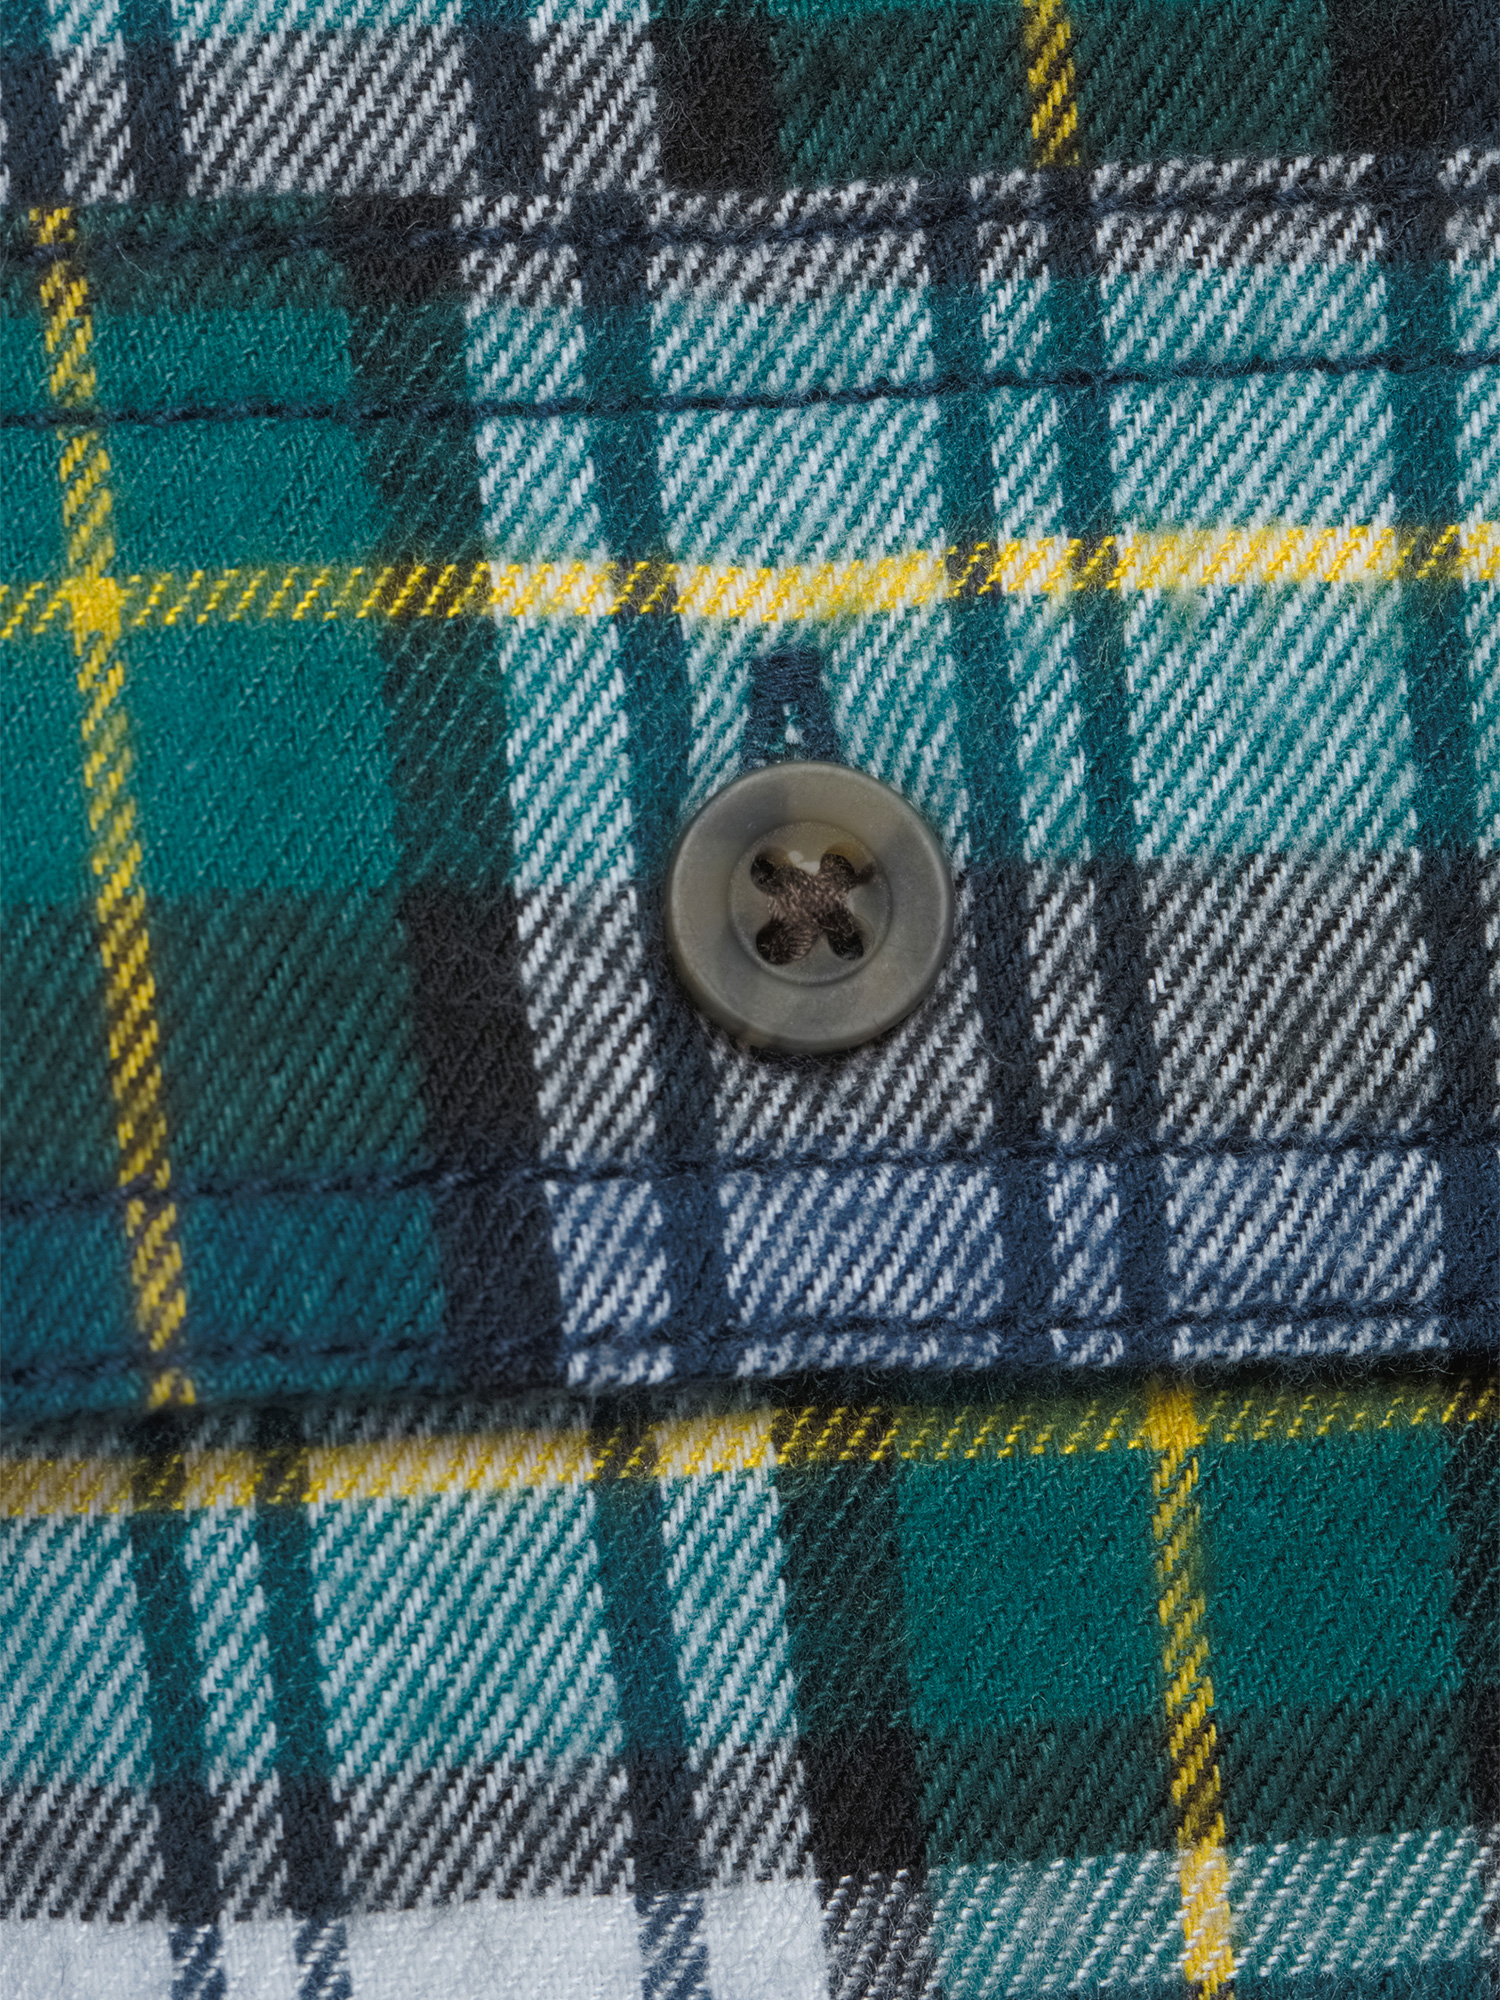 George Men's and Big Men's Super Soft Flannel Shirt, up to 5XLT - image 4 of 5